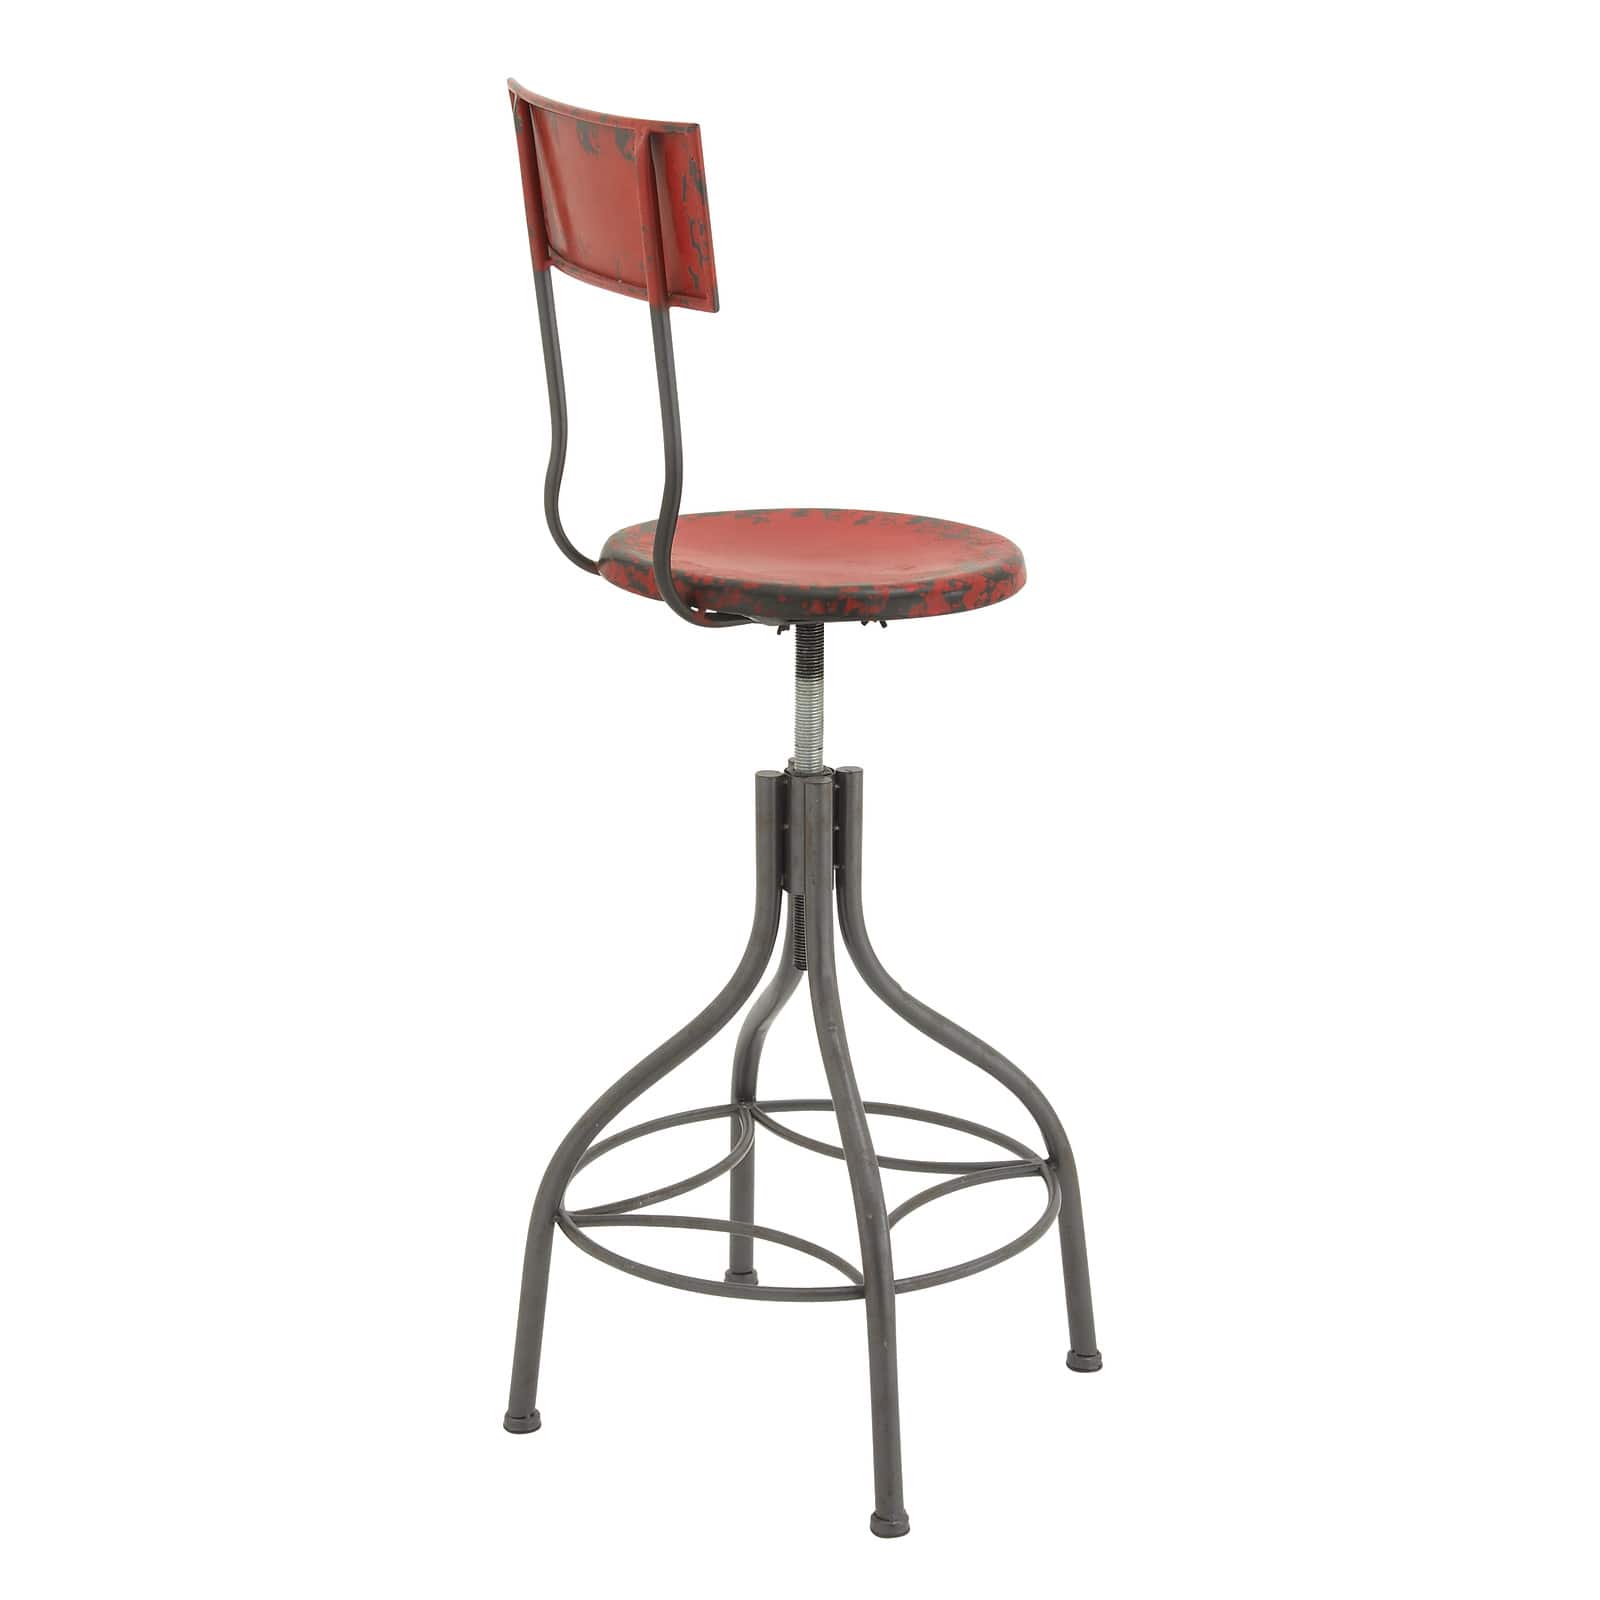 Grey Iron and Metal Vintage Bar Chair, 41&#x22; x 18&#x22; x 18&#x22;